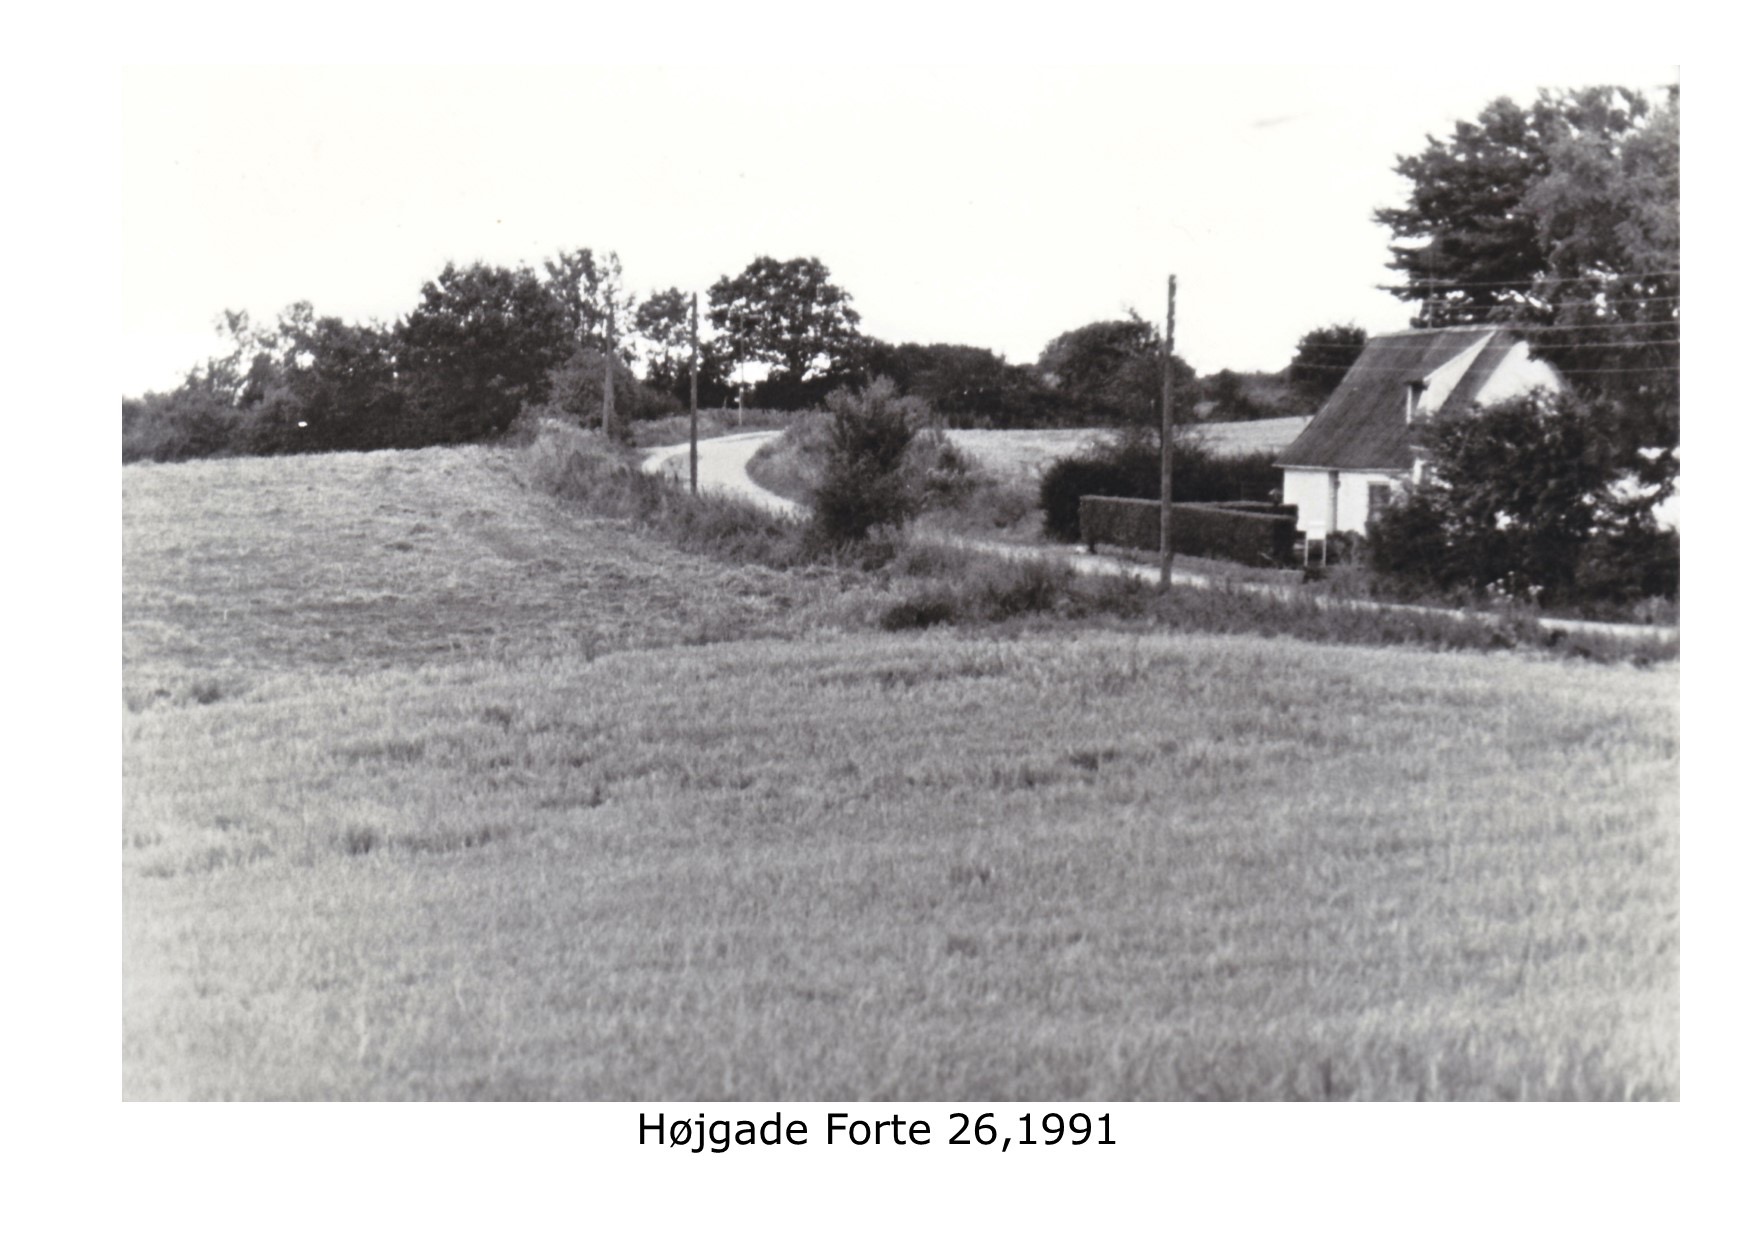 Højgade Forte 26 1991 